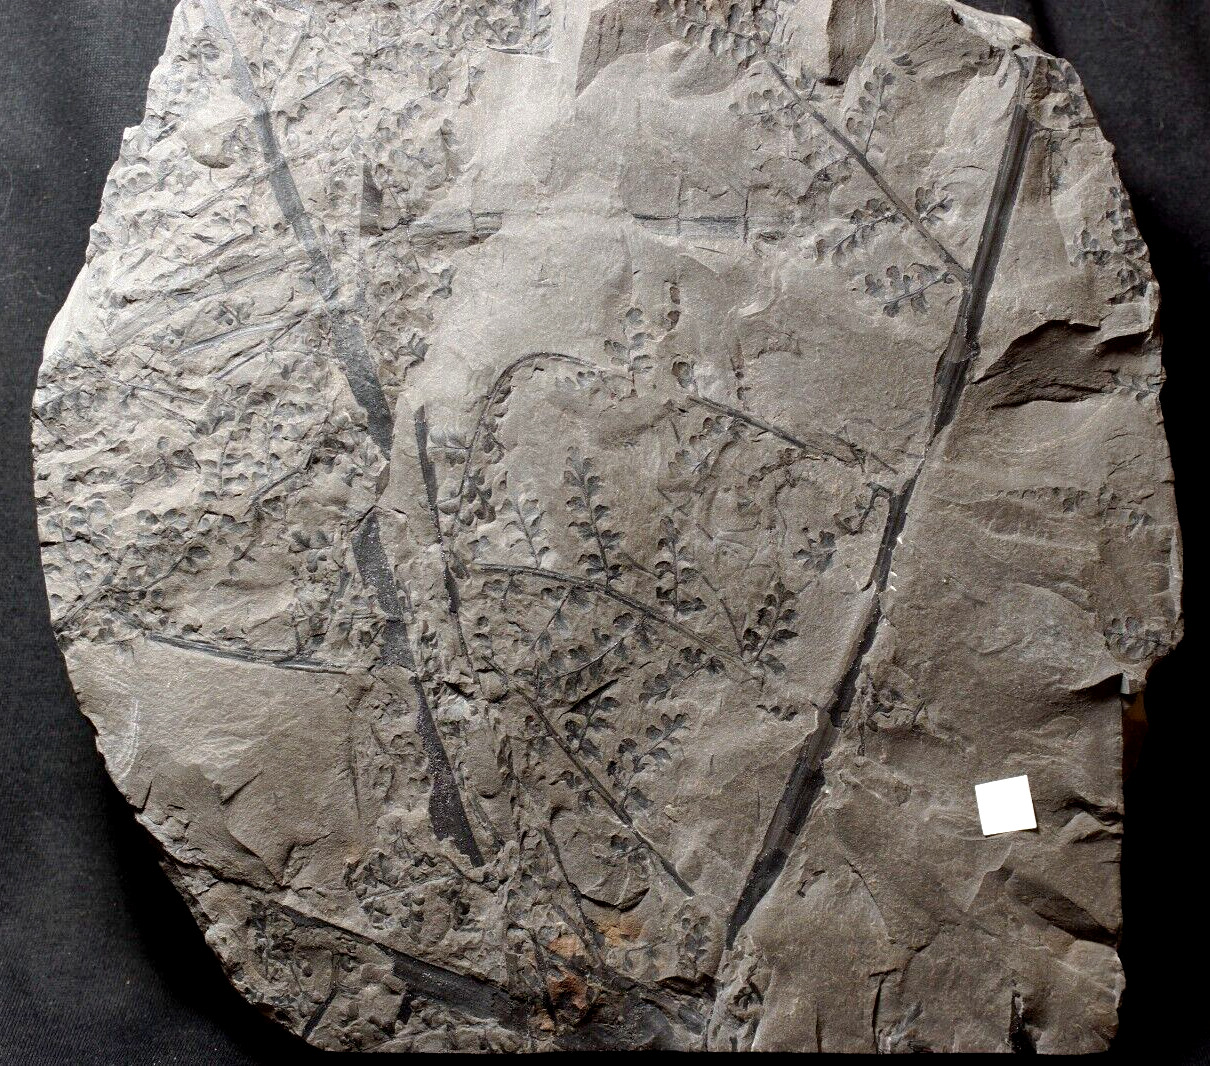 Museum quaity huge Carboniferous plant fossil seed fern Eusphenopteris sauveuri